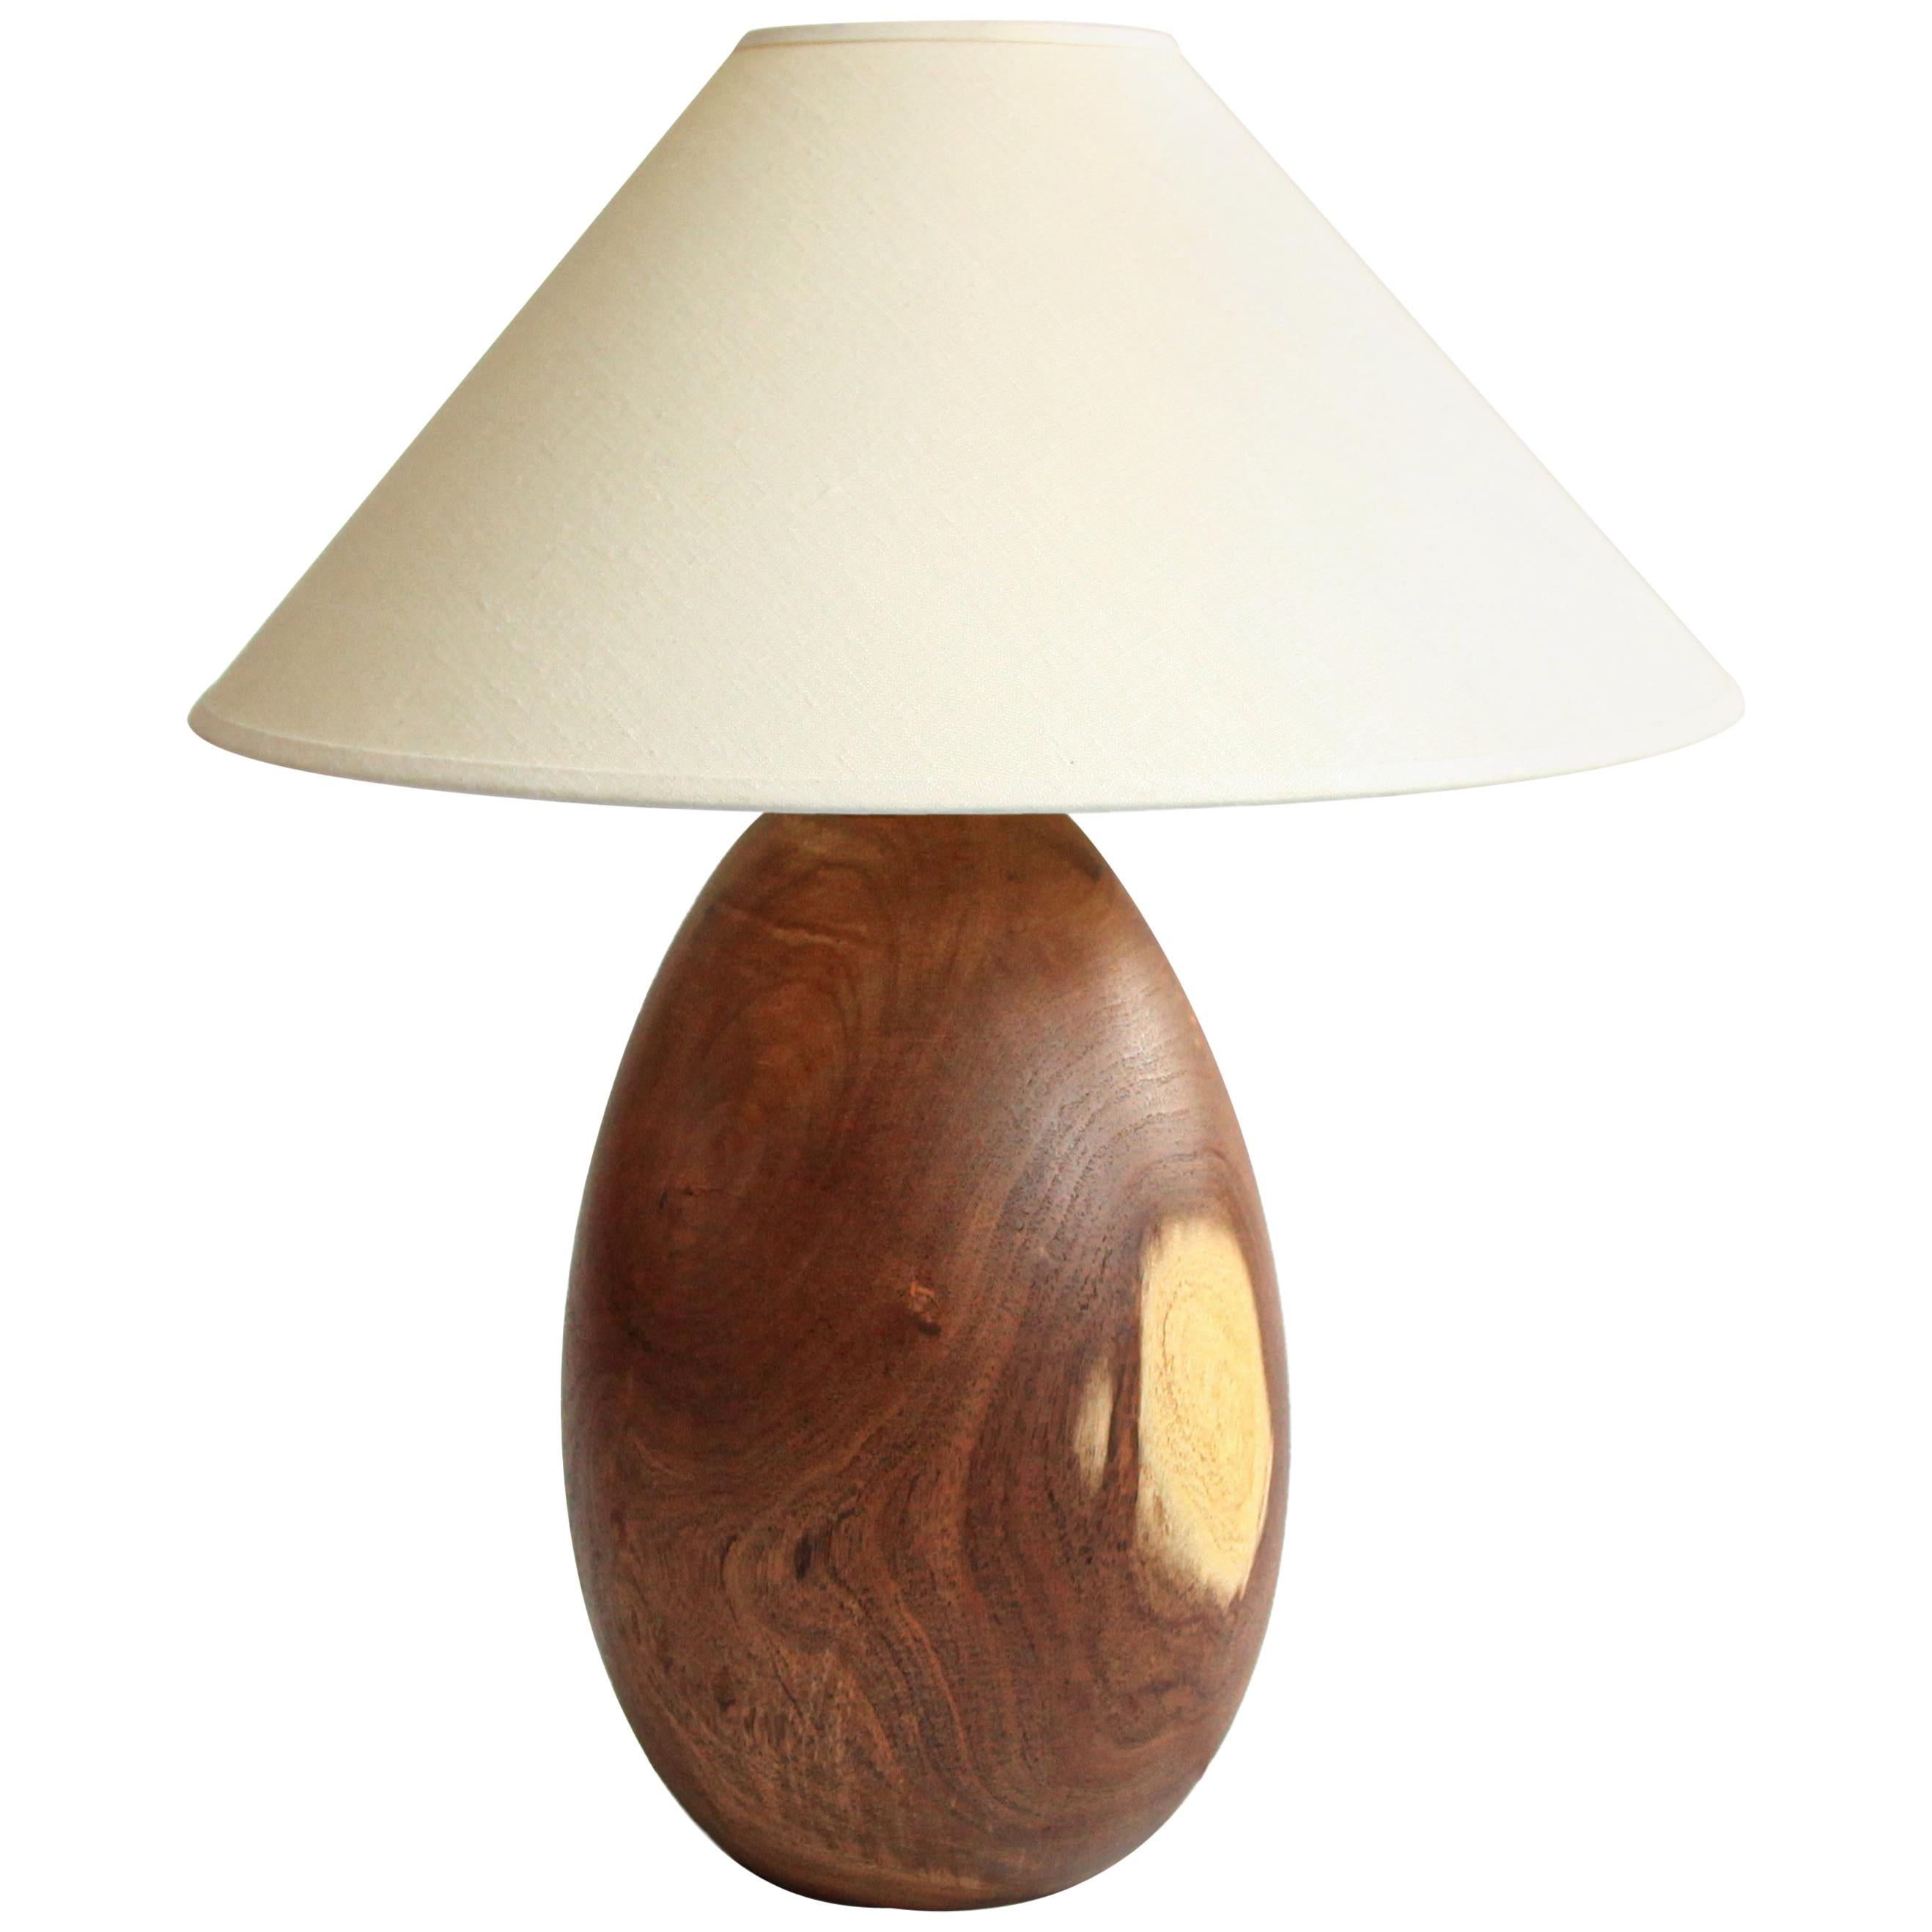 Tropical Hardwood Lamp + White Linen Shade, Medium Large, Árbol Collection, 30